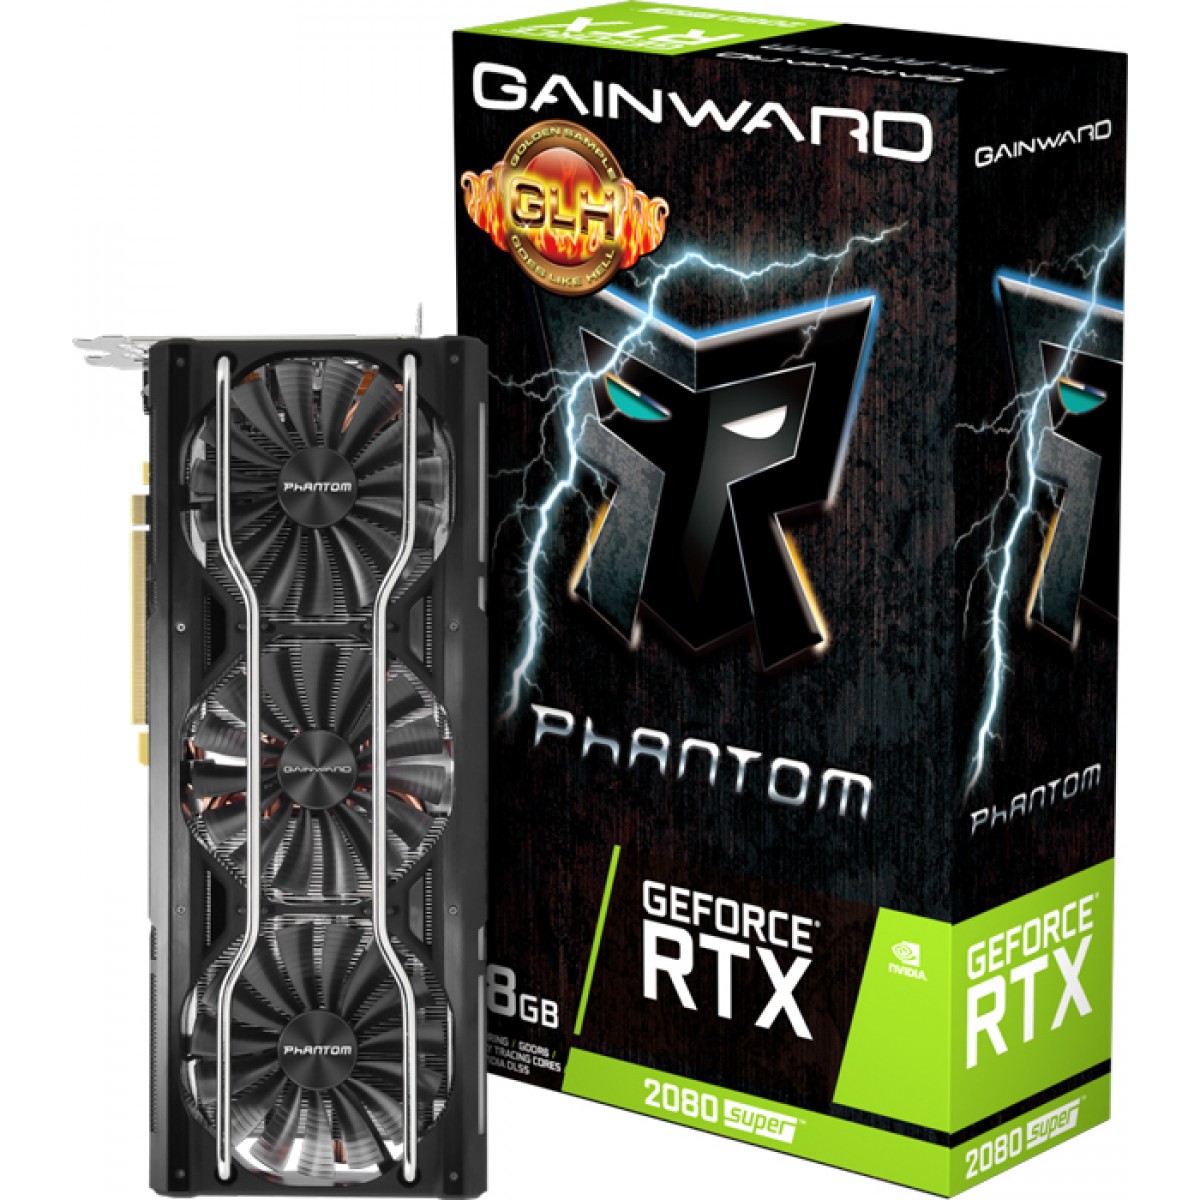 Placa de Vídeo Gainward GeForce RTX 2080 Super Phantom GLH, 8GB GDDR6, 256Bit